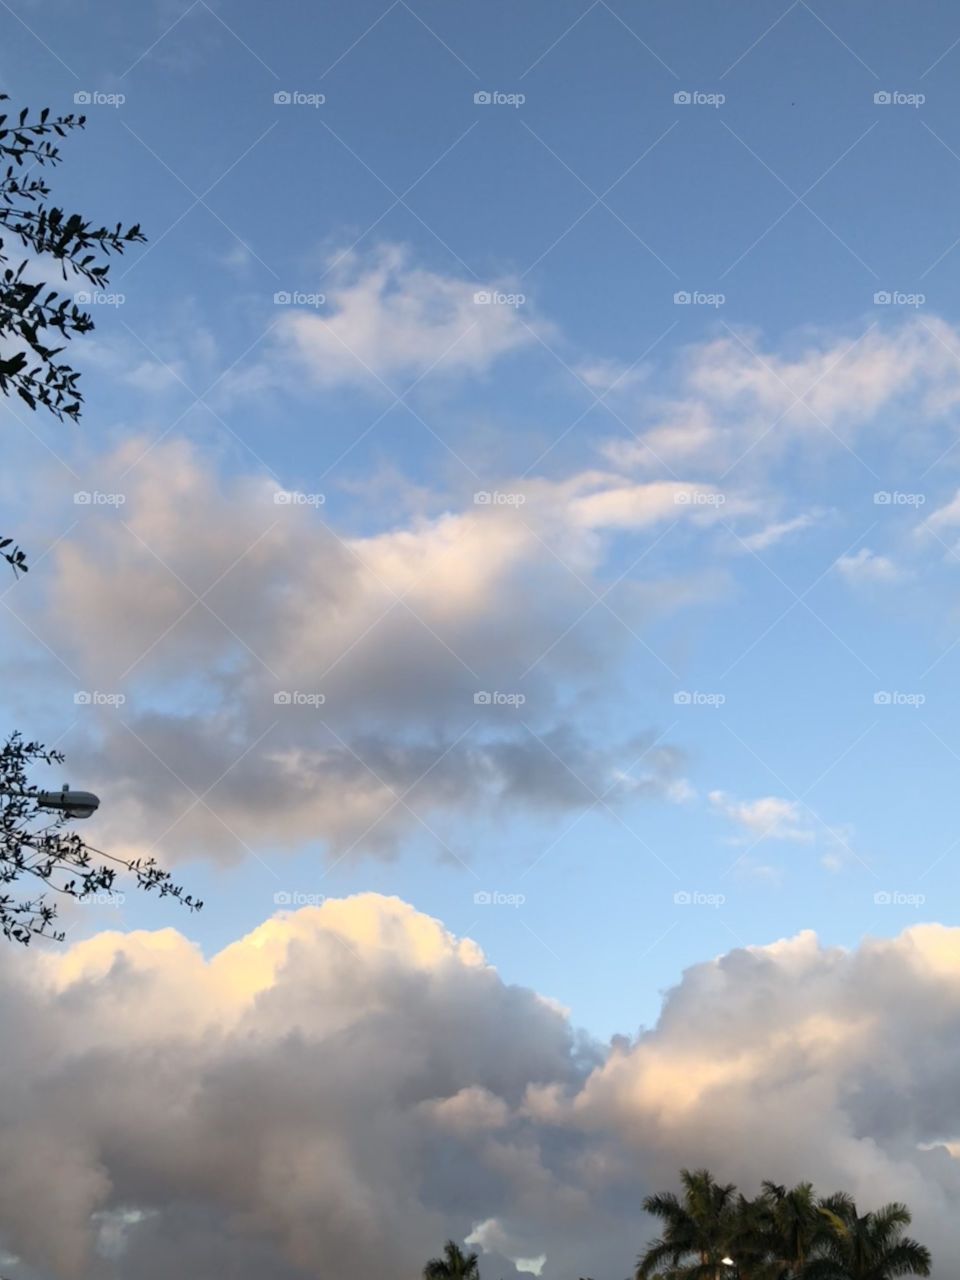 Outdoors, light, cloud, sky, weather